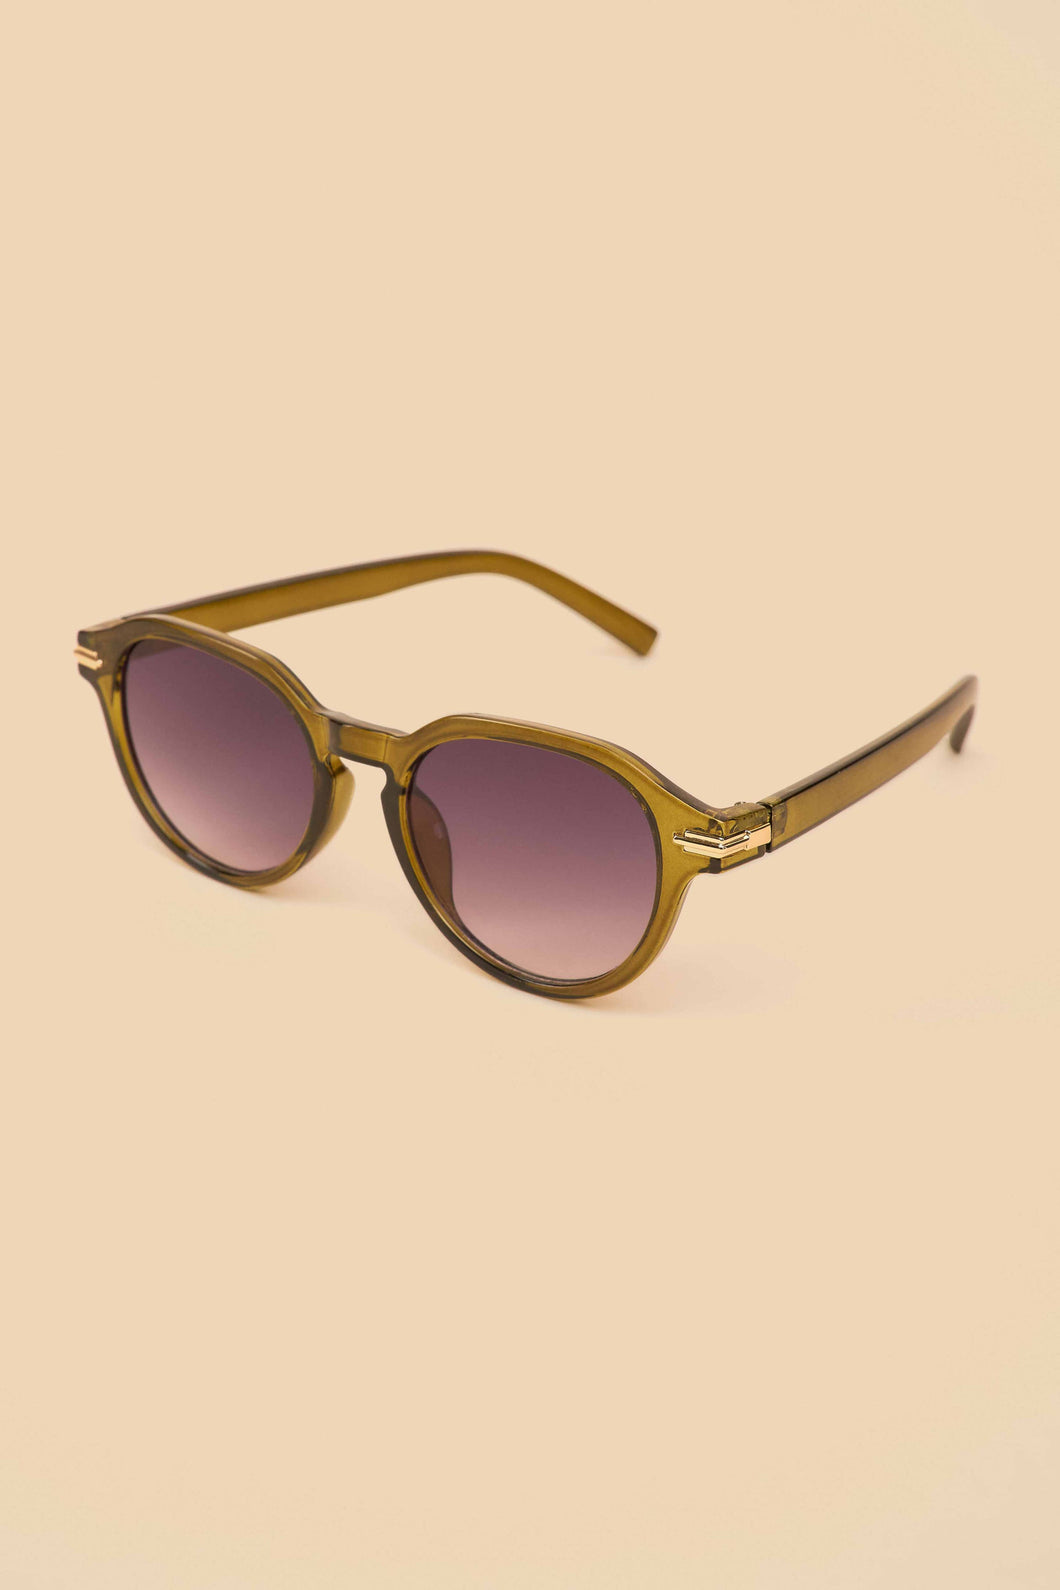 Limited Edition Lara Sunglasses - Olive